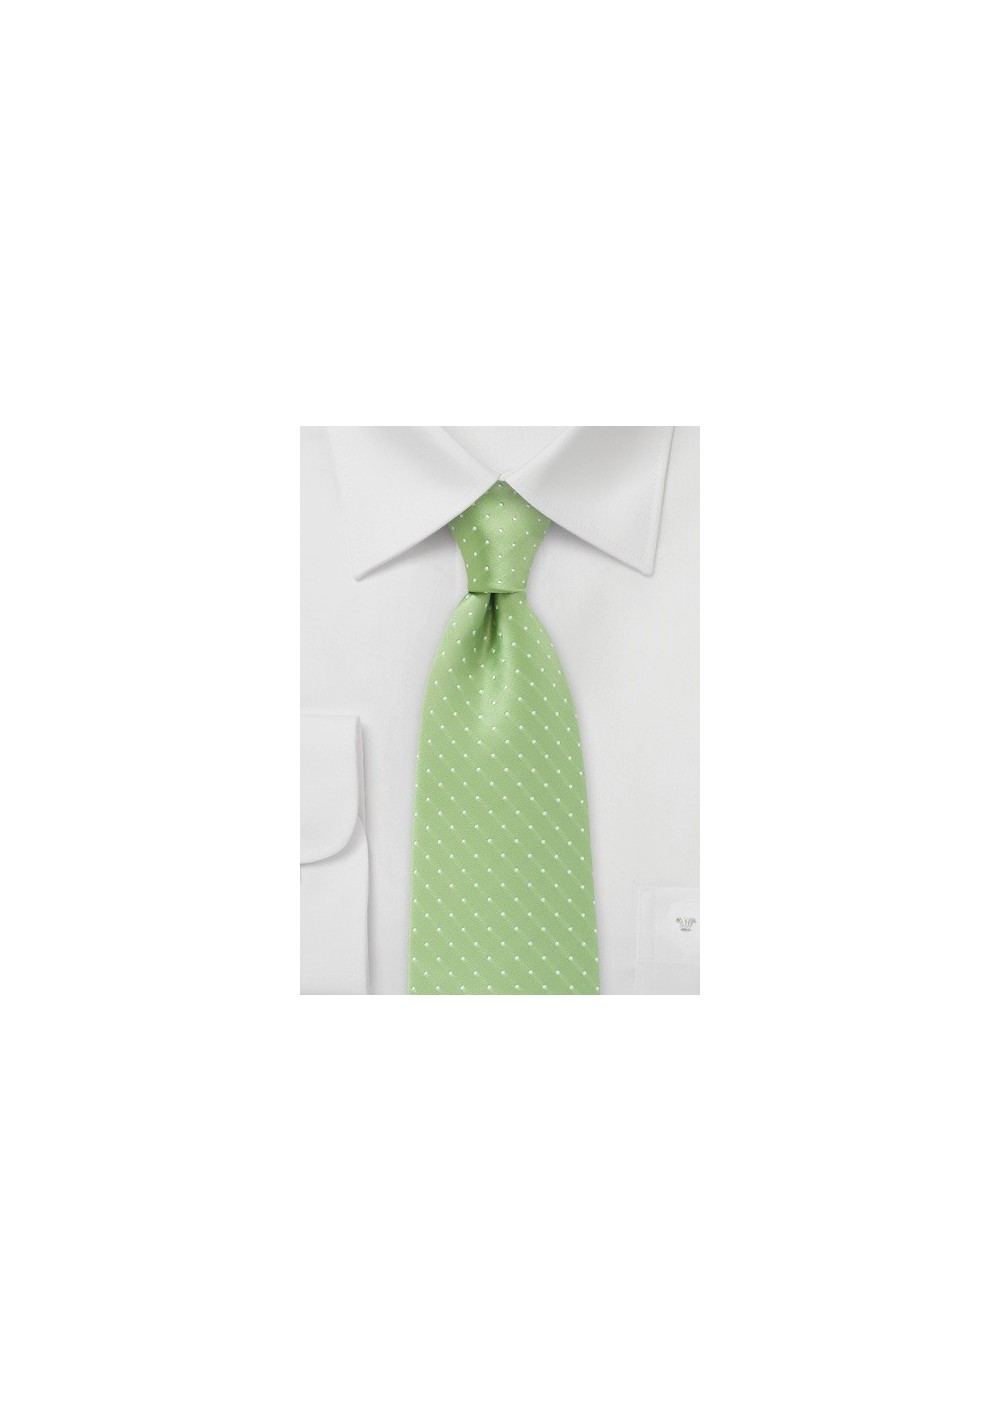 XL Length Light Green Polka Dot Tie